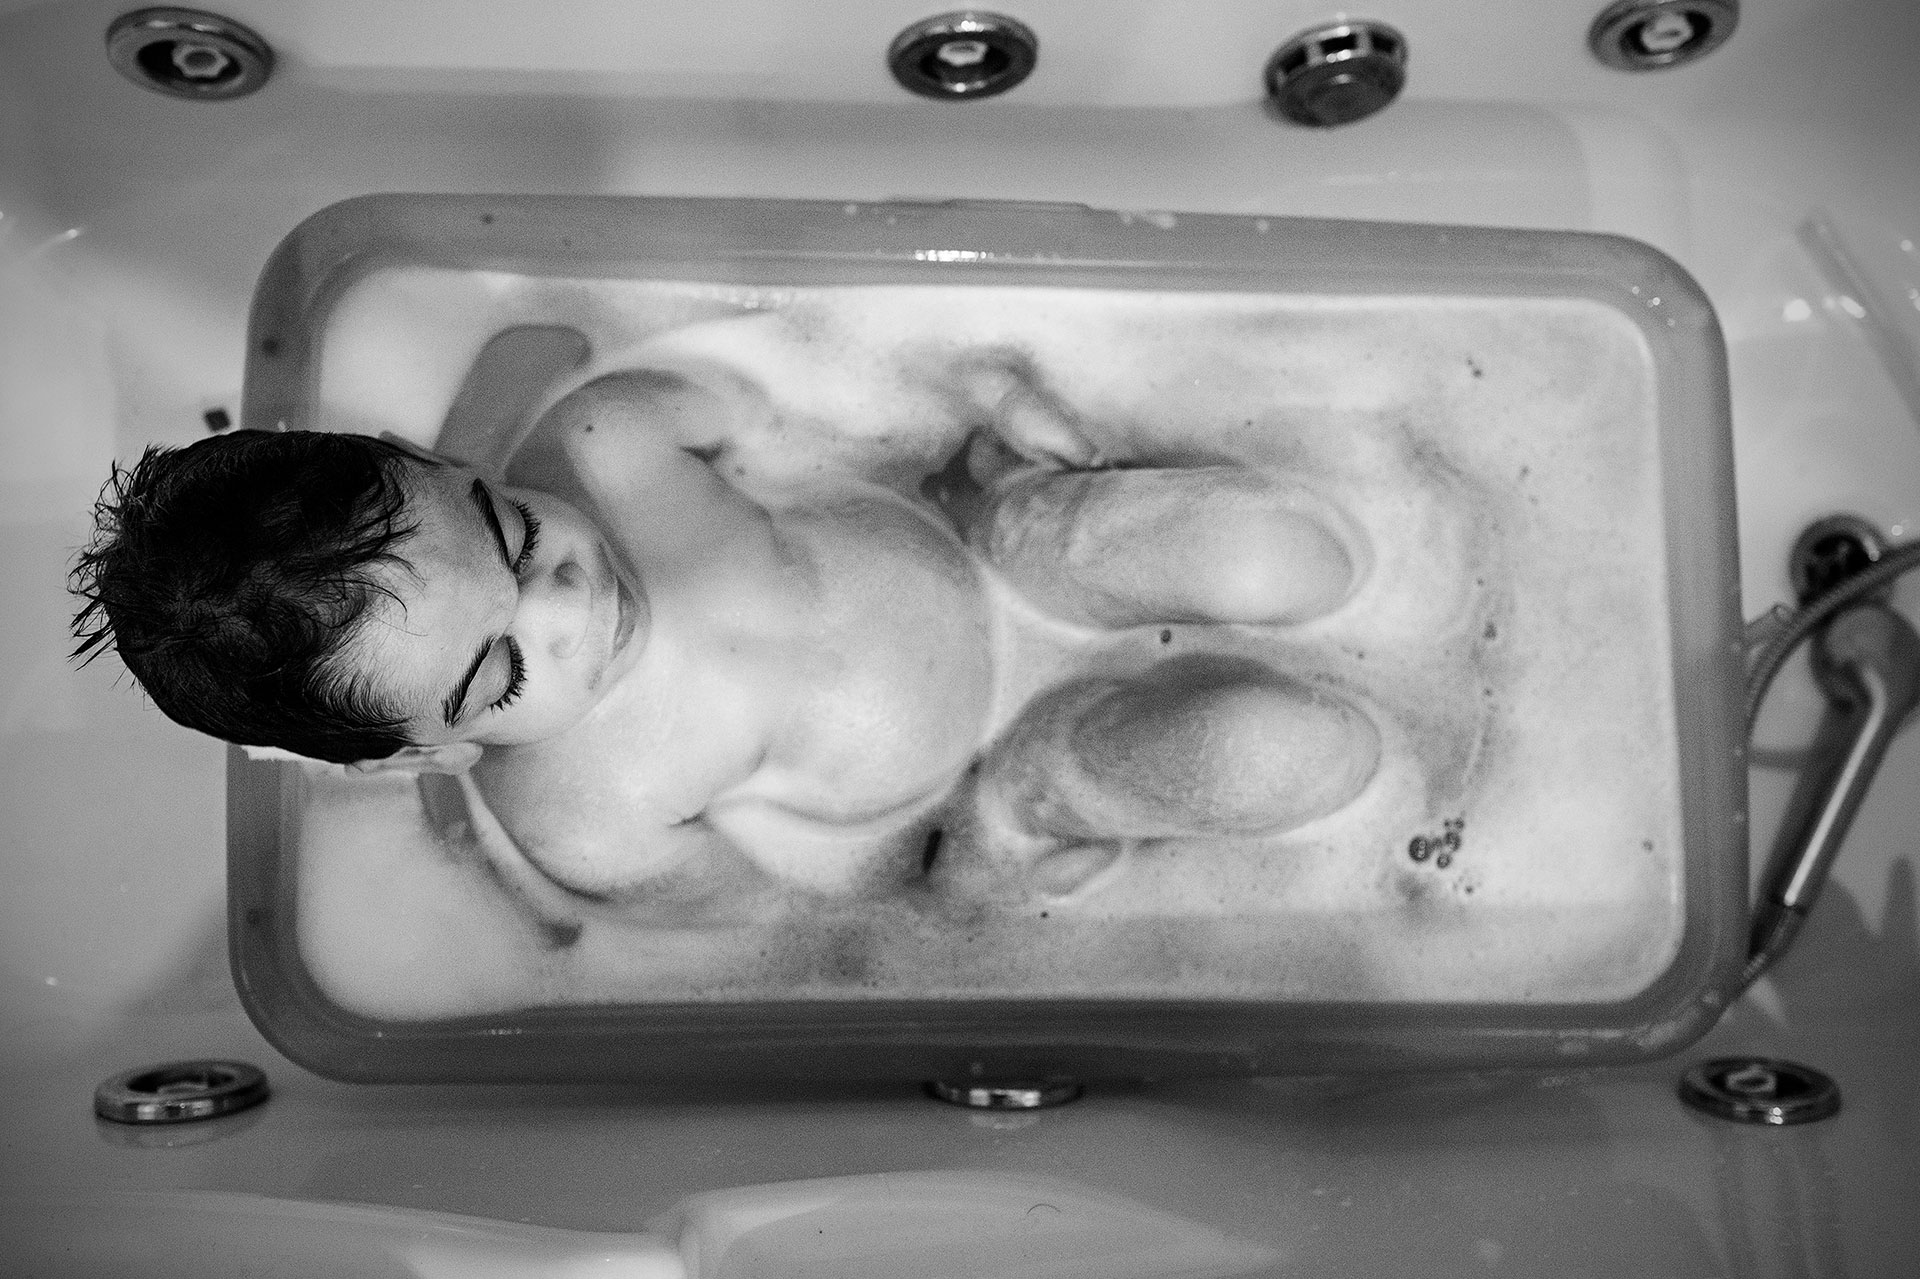 Nacho resting in his bathtu.